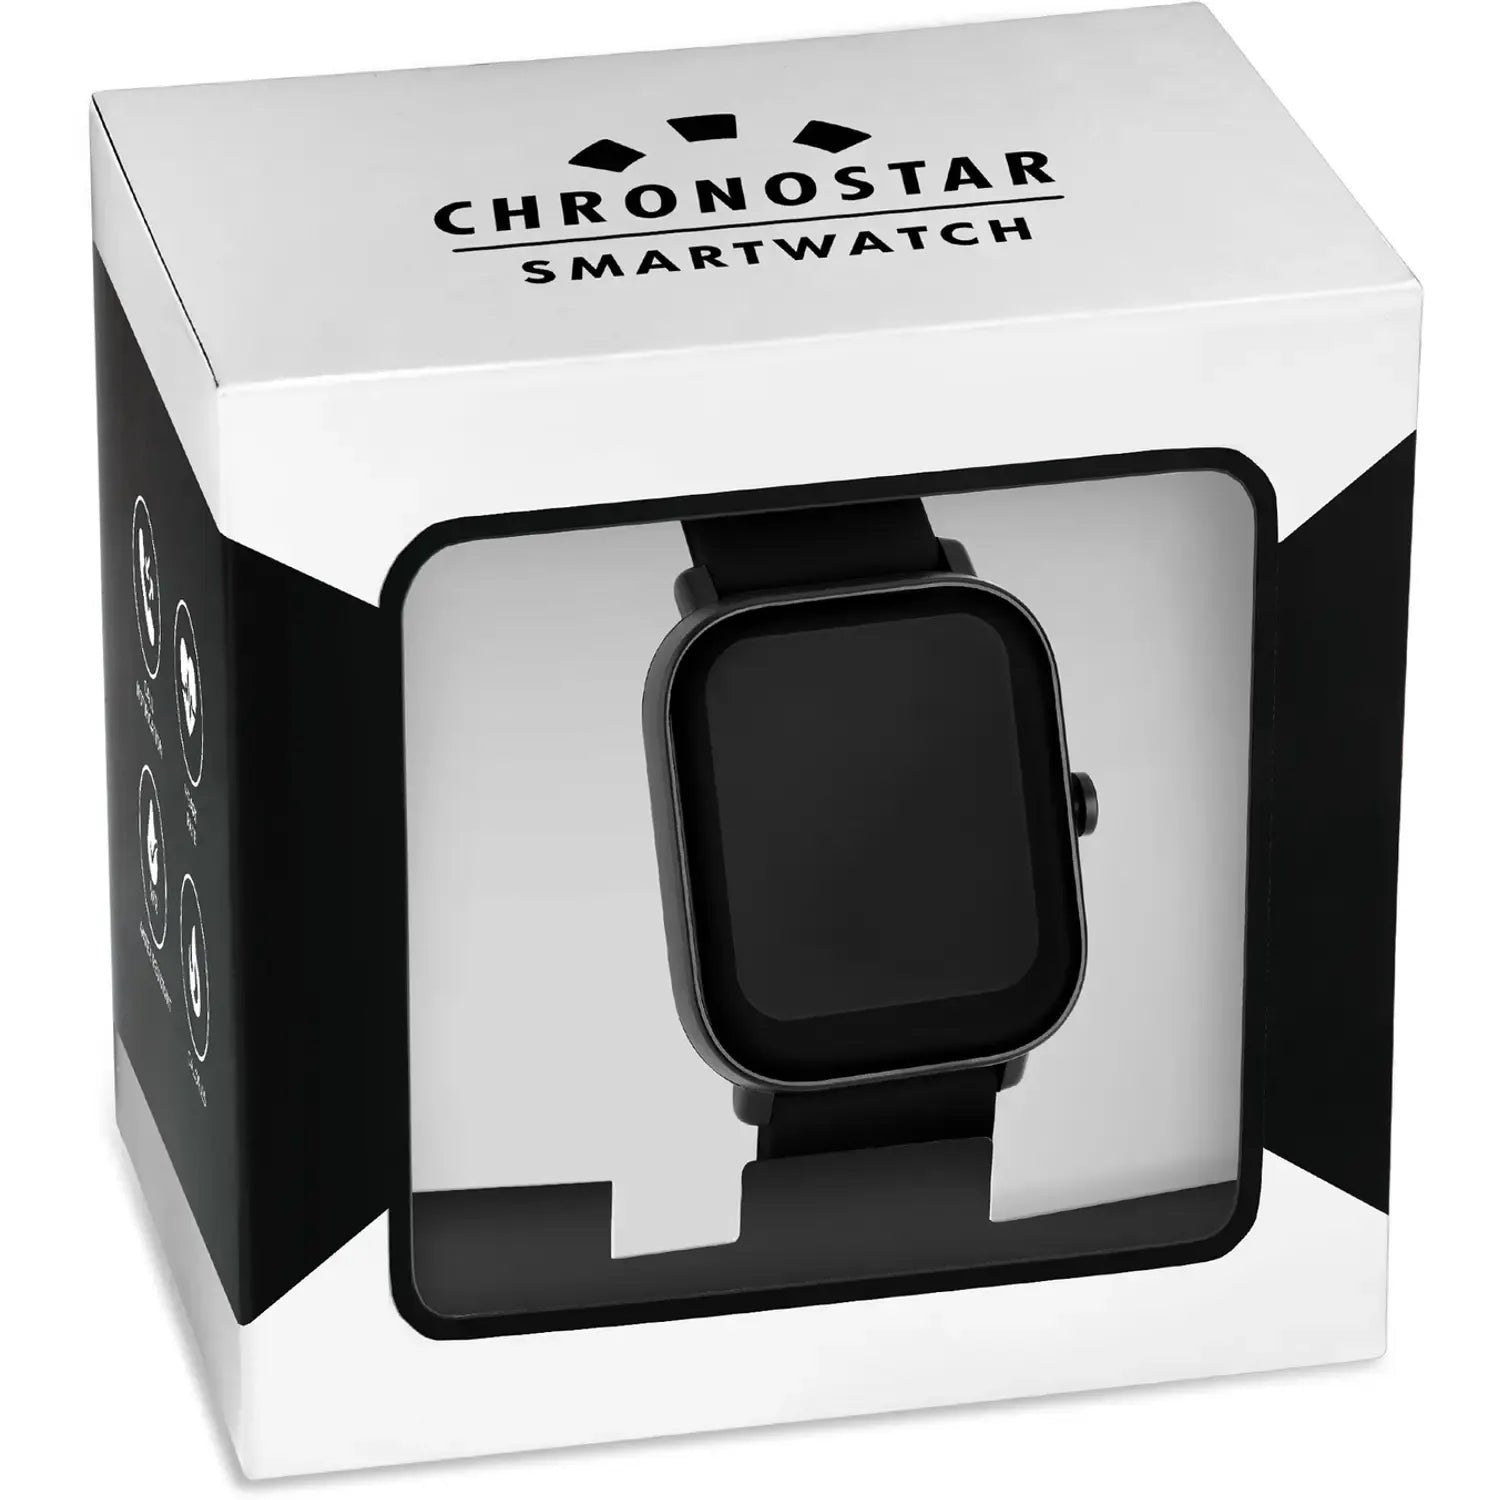 Orologio Smartwatch unisex Chronostar C-Smart R3753314001 - Arena Gioielli 